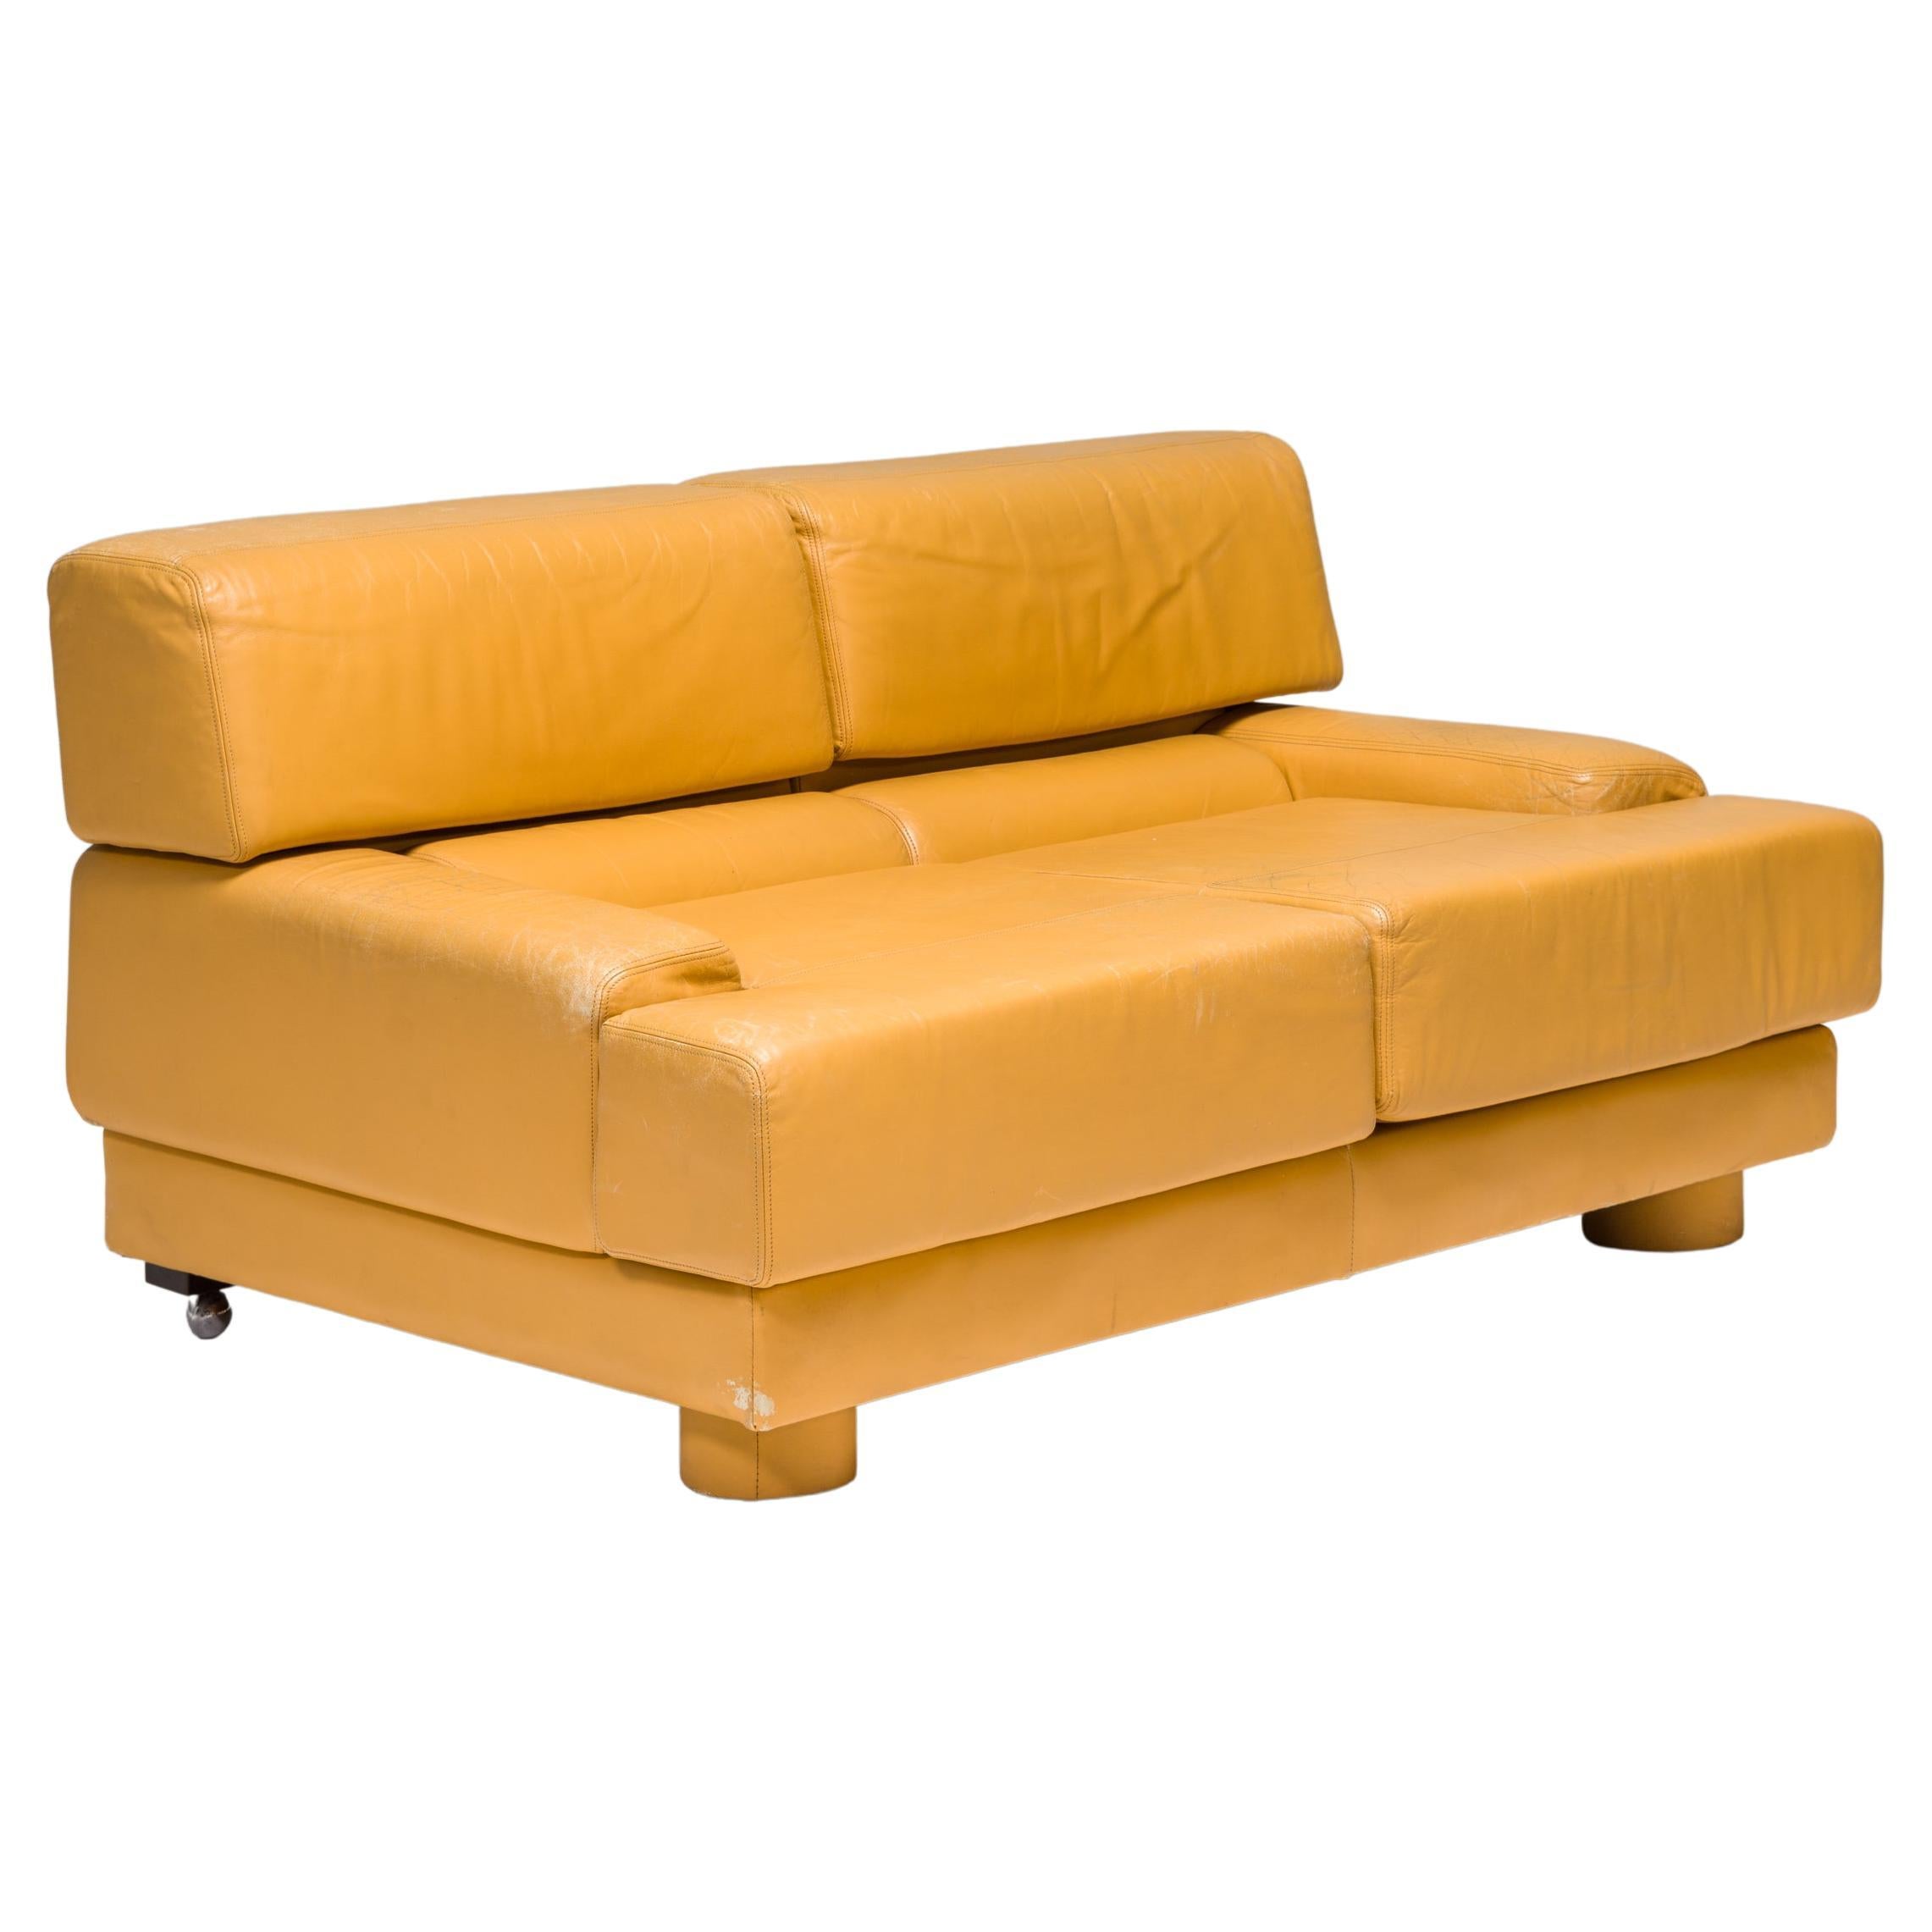 Percival Lafer Yellow Leather 2 Seat Sofa, circa 1960 For Sale